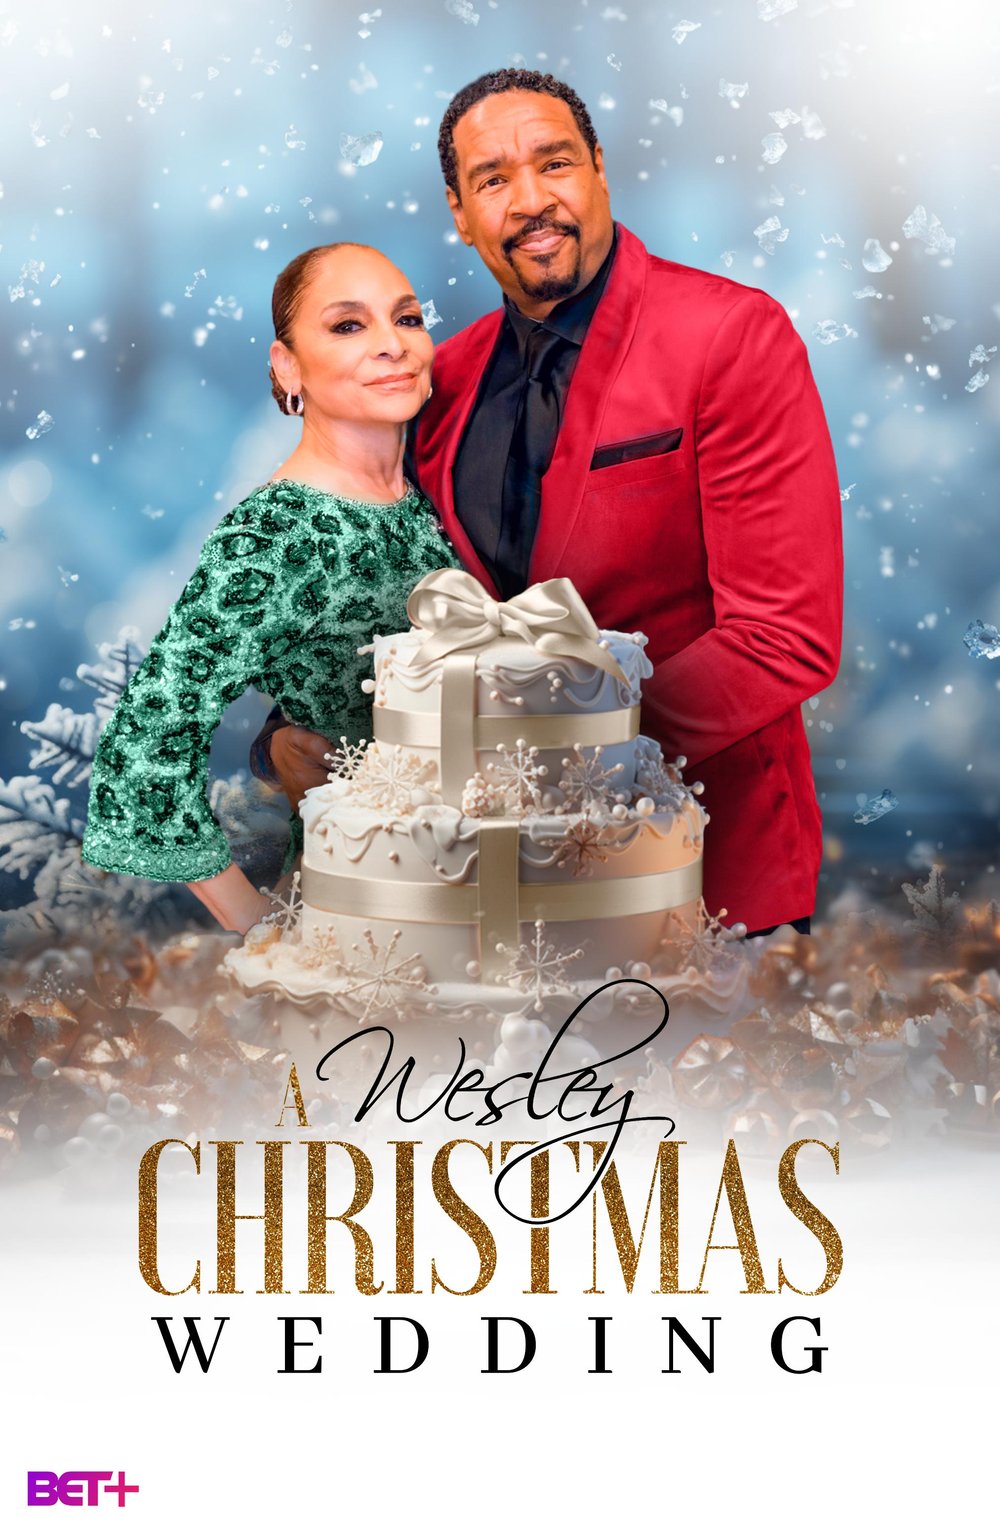 A Wesley Christmas Wedding poster.jpg